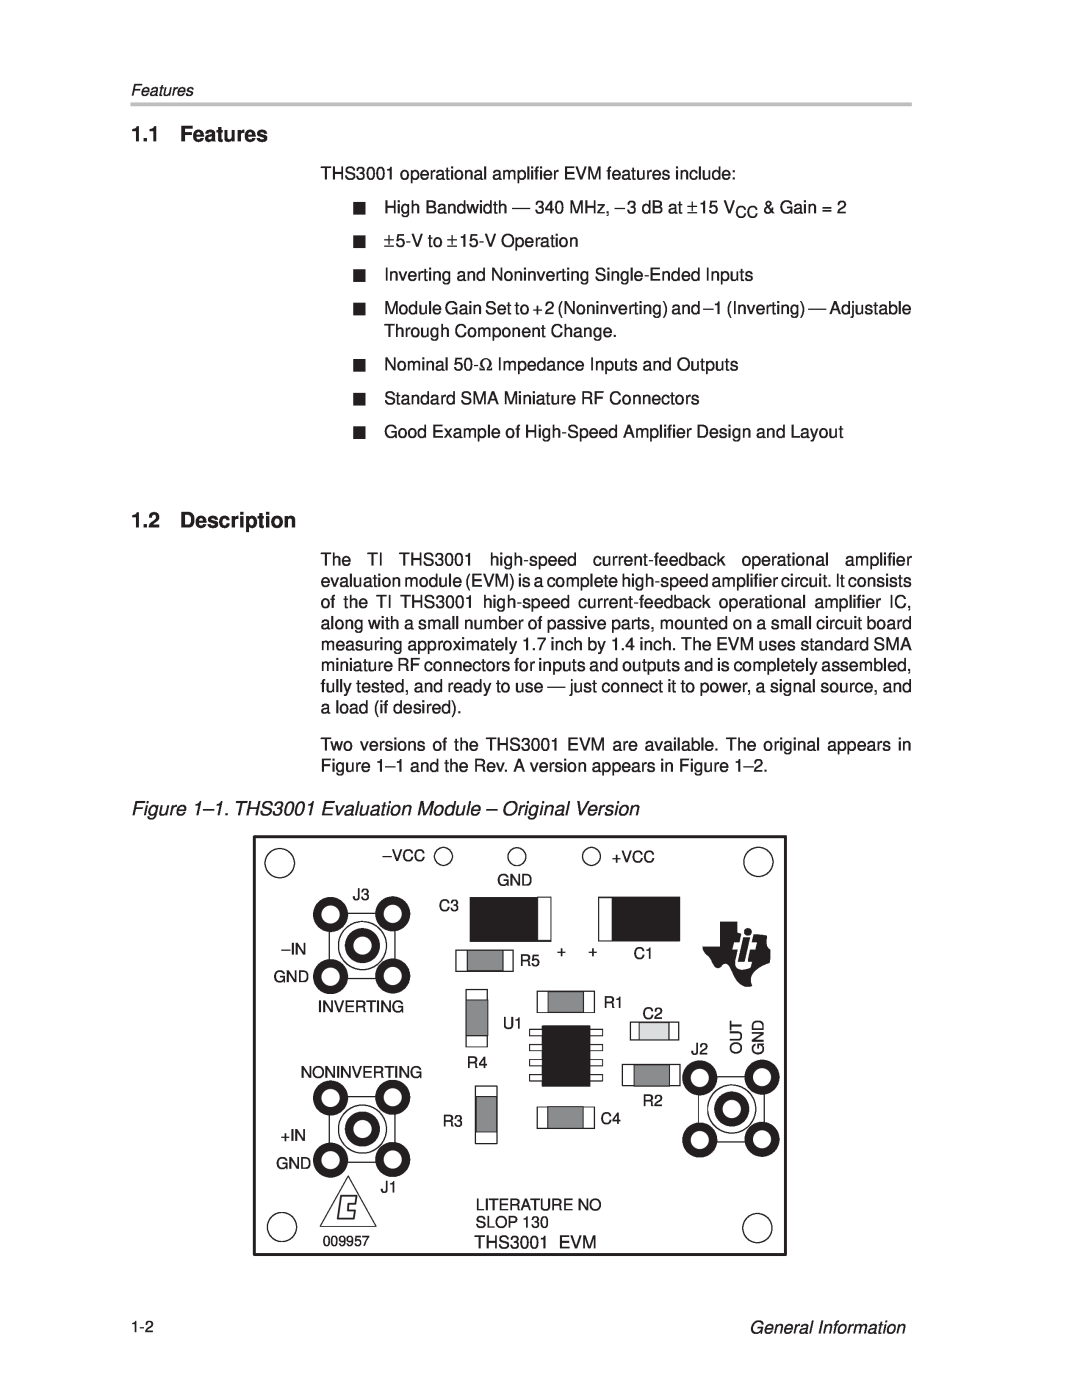 Texas Instruments THS3001 manual Features, Description, General Information 